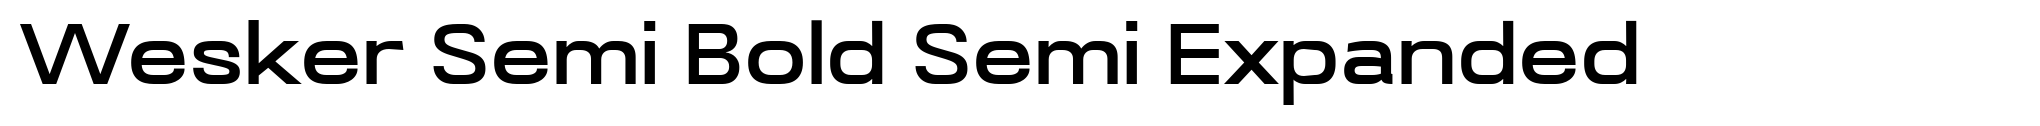 Wesker Semi Bold Semi Expanded image